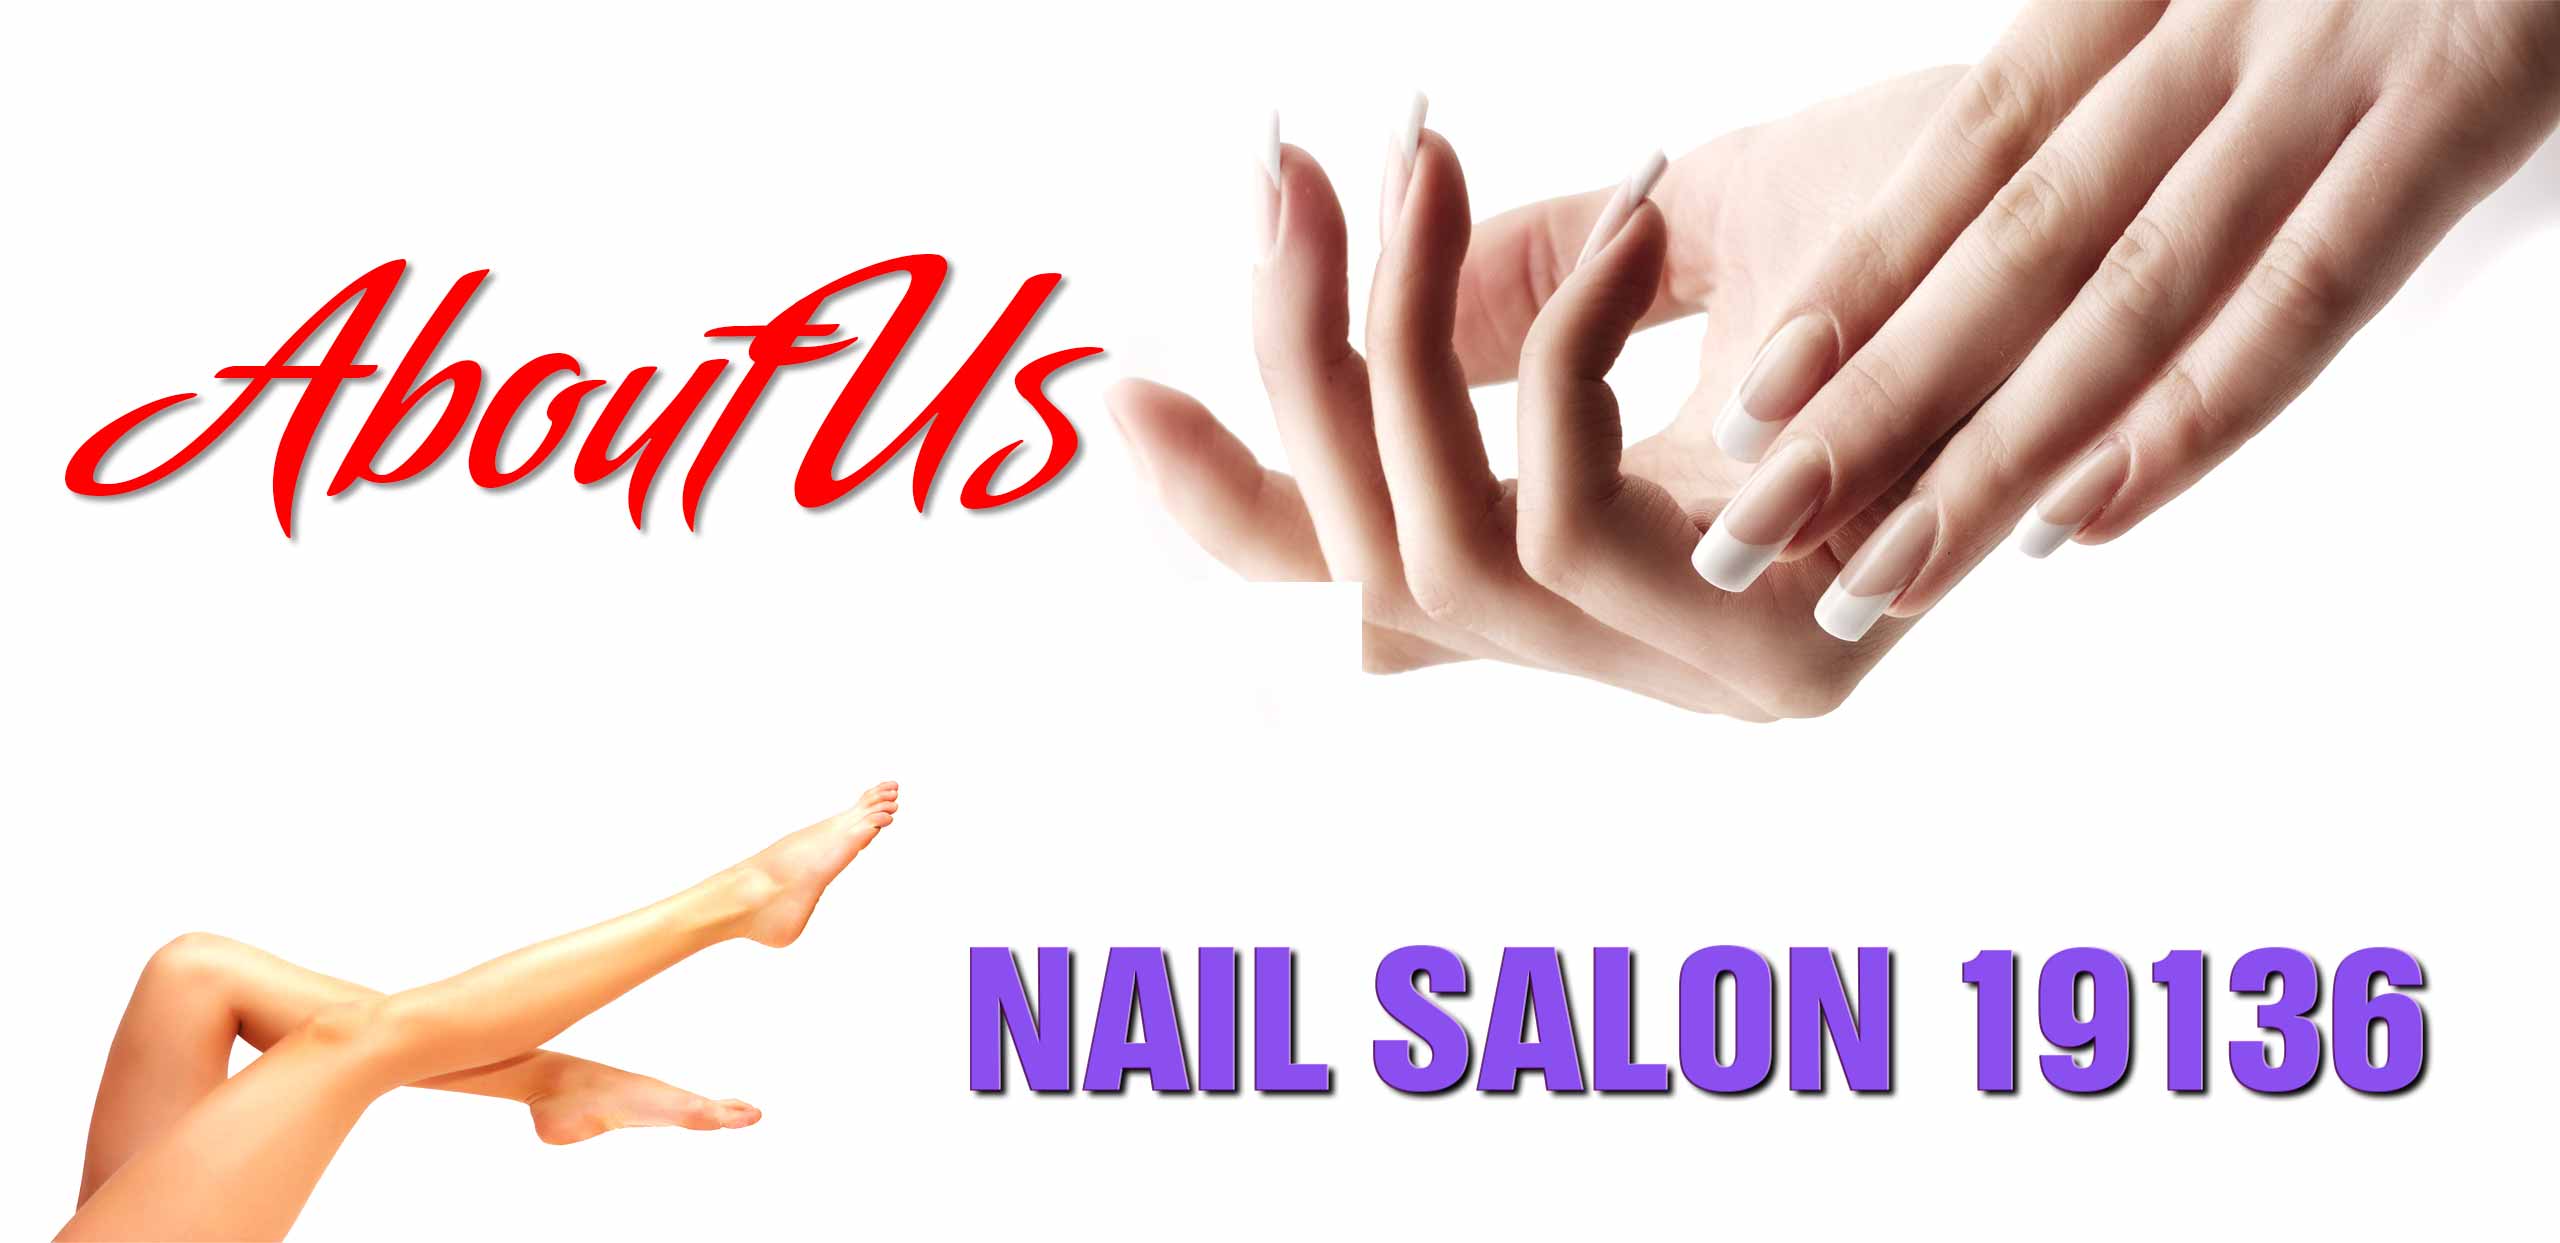 Nail Salon Northeast Philadelphia 19136 19135 Manicures Pedicures  